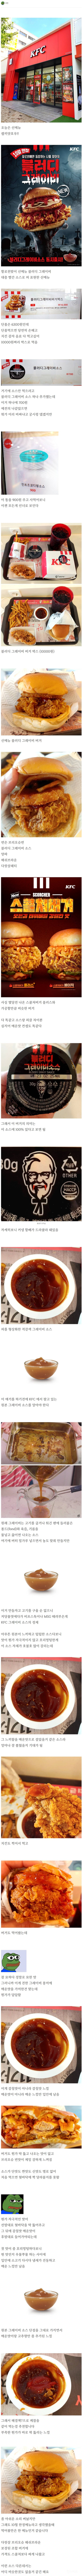 KFC 블러디 그레이비 후기.jpg | 인스티즈